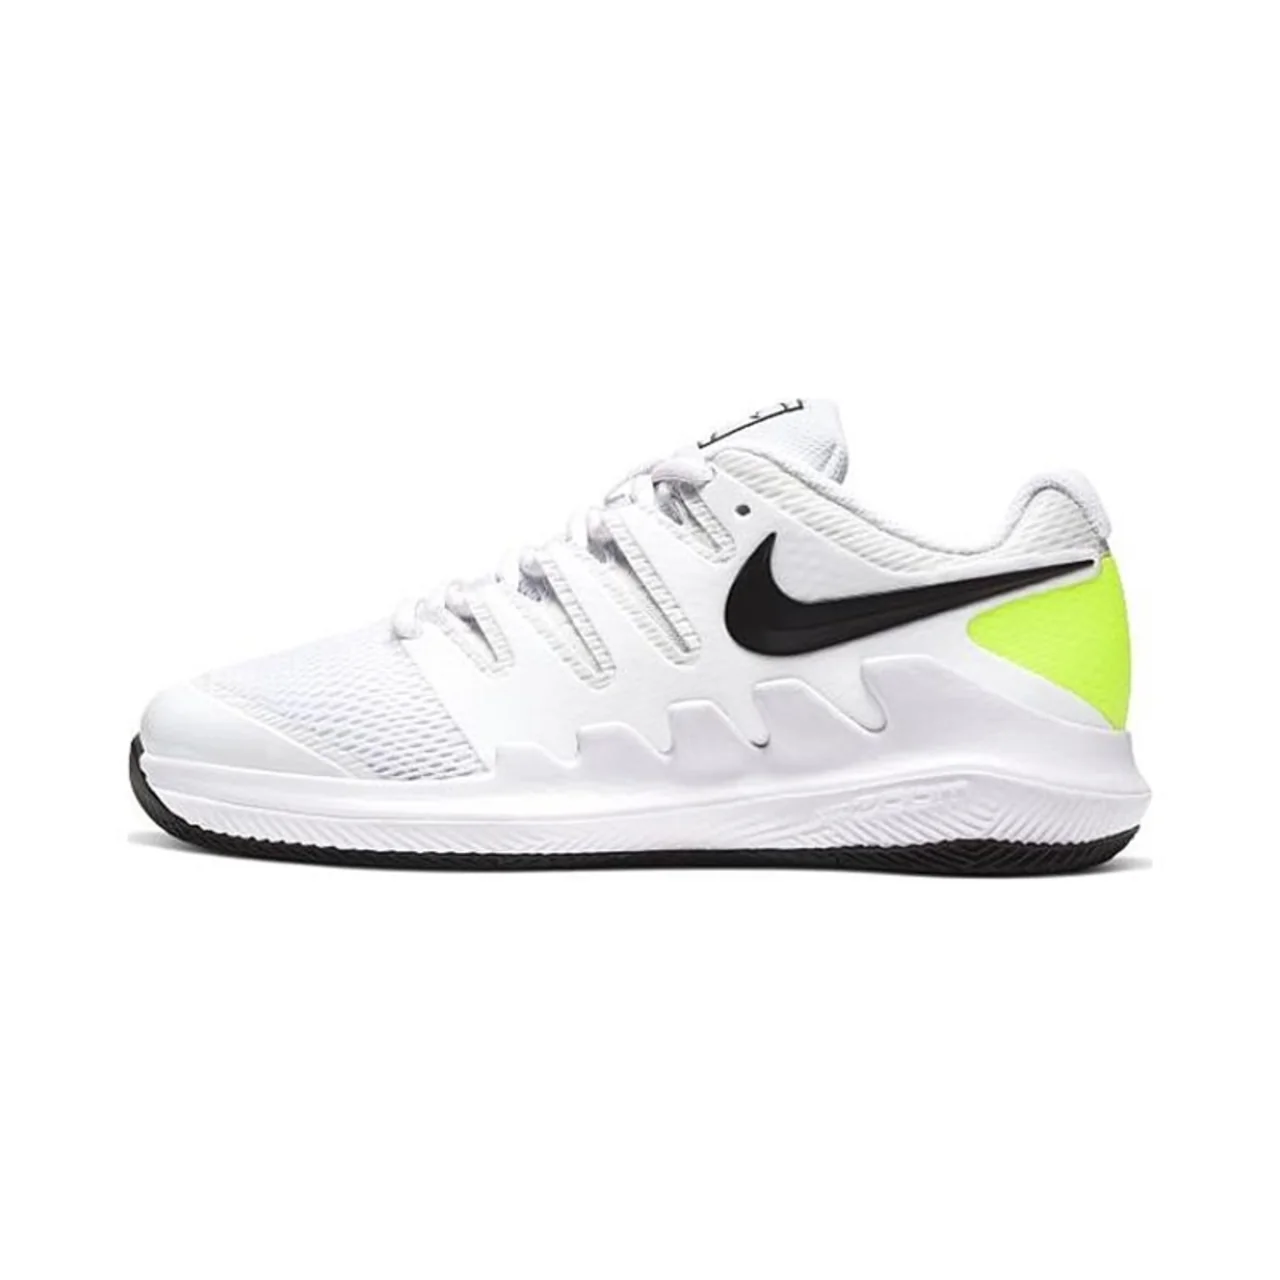 Nike Vapor X Junior White/Volt